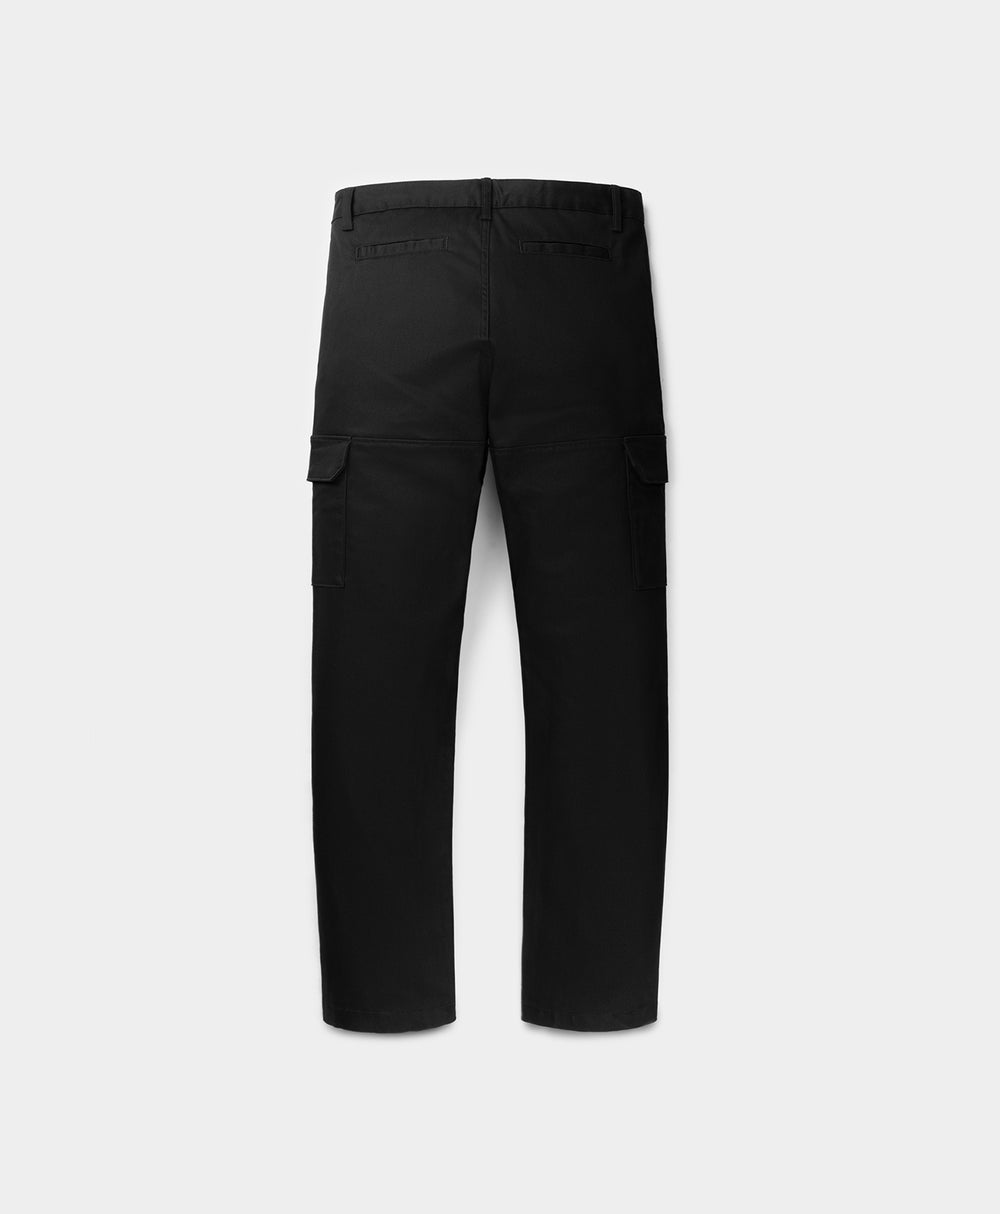 DP - Black Ecargo Pants - Packshot - Rear